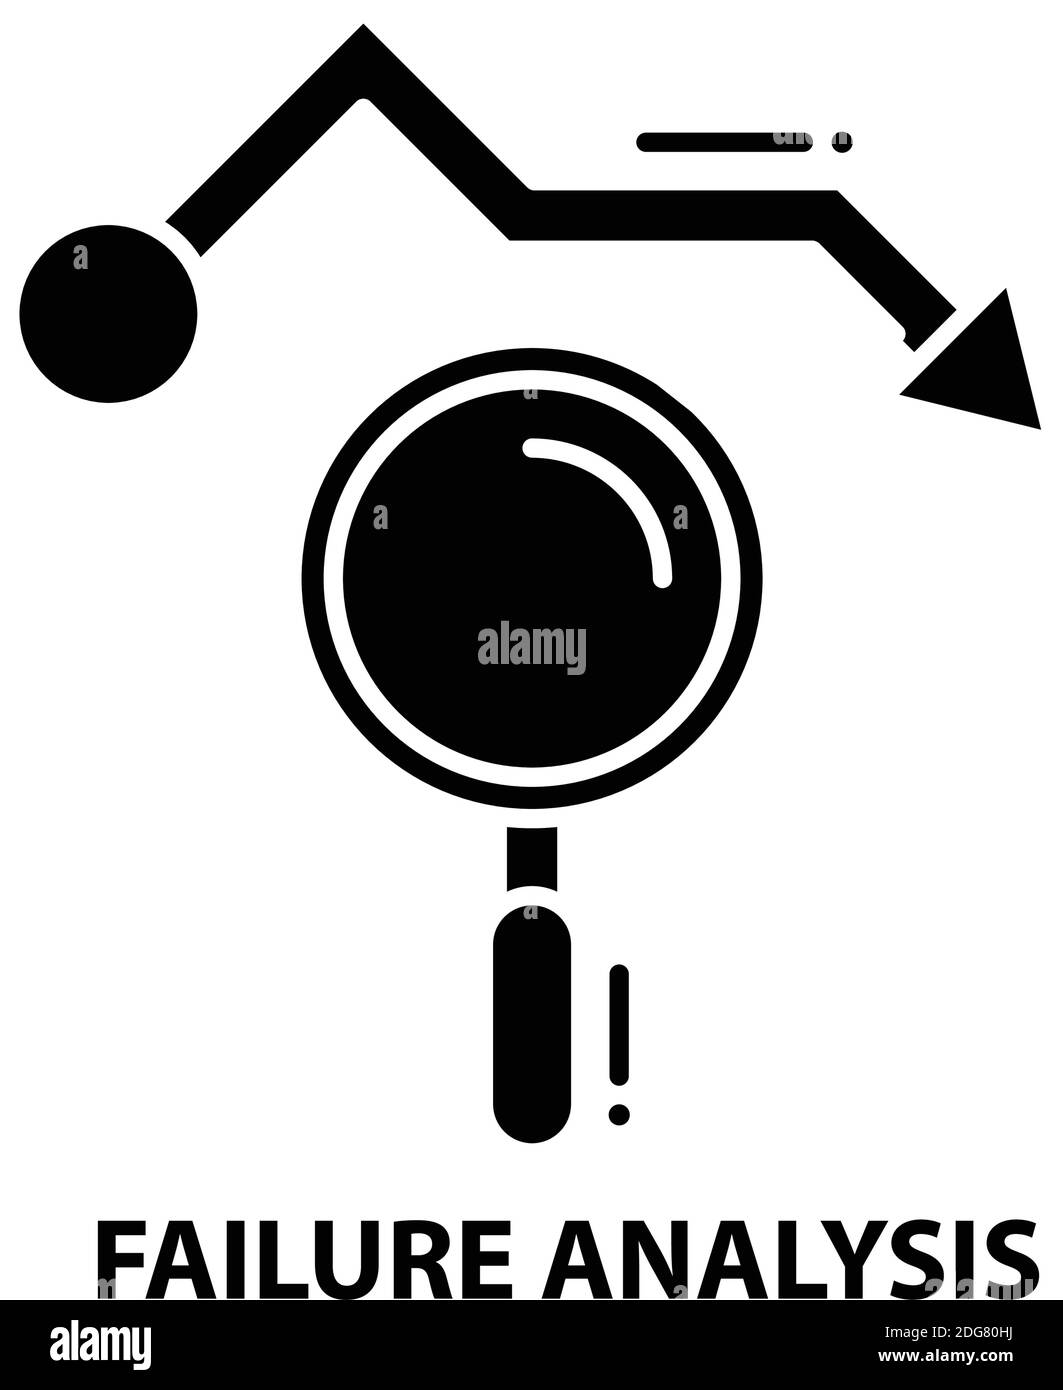 failure analysis icon, black vector sign with editable strokes, concept illustration Stock Vector